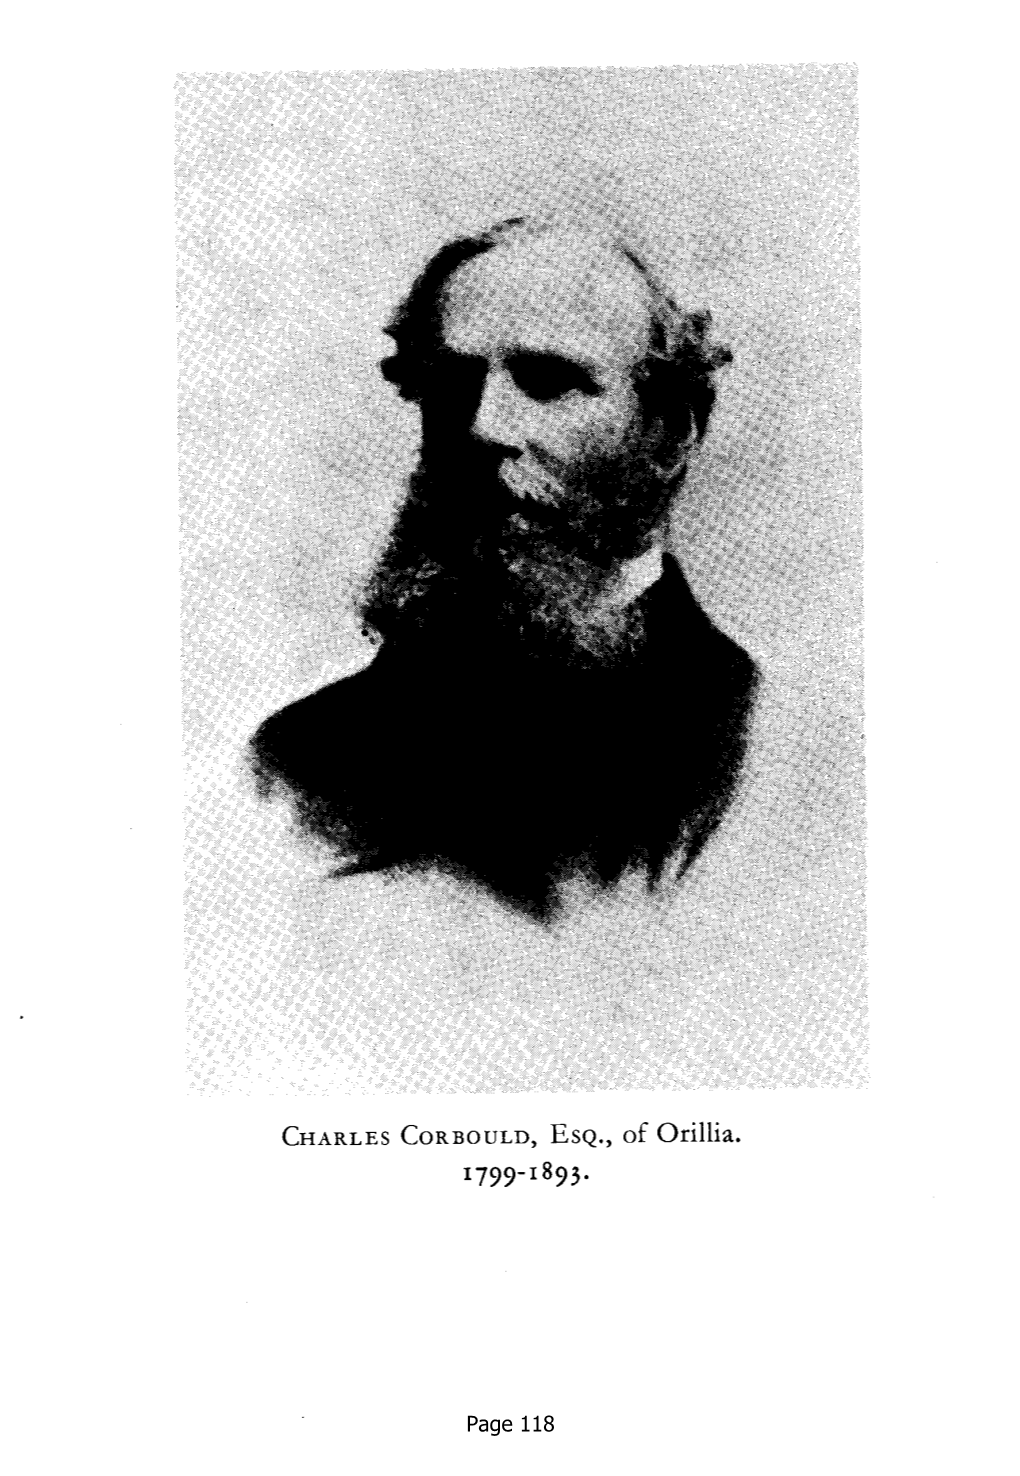 CHARLES CORBOULD, Esq., of Orillia